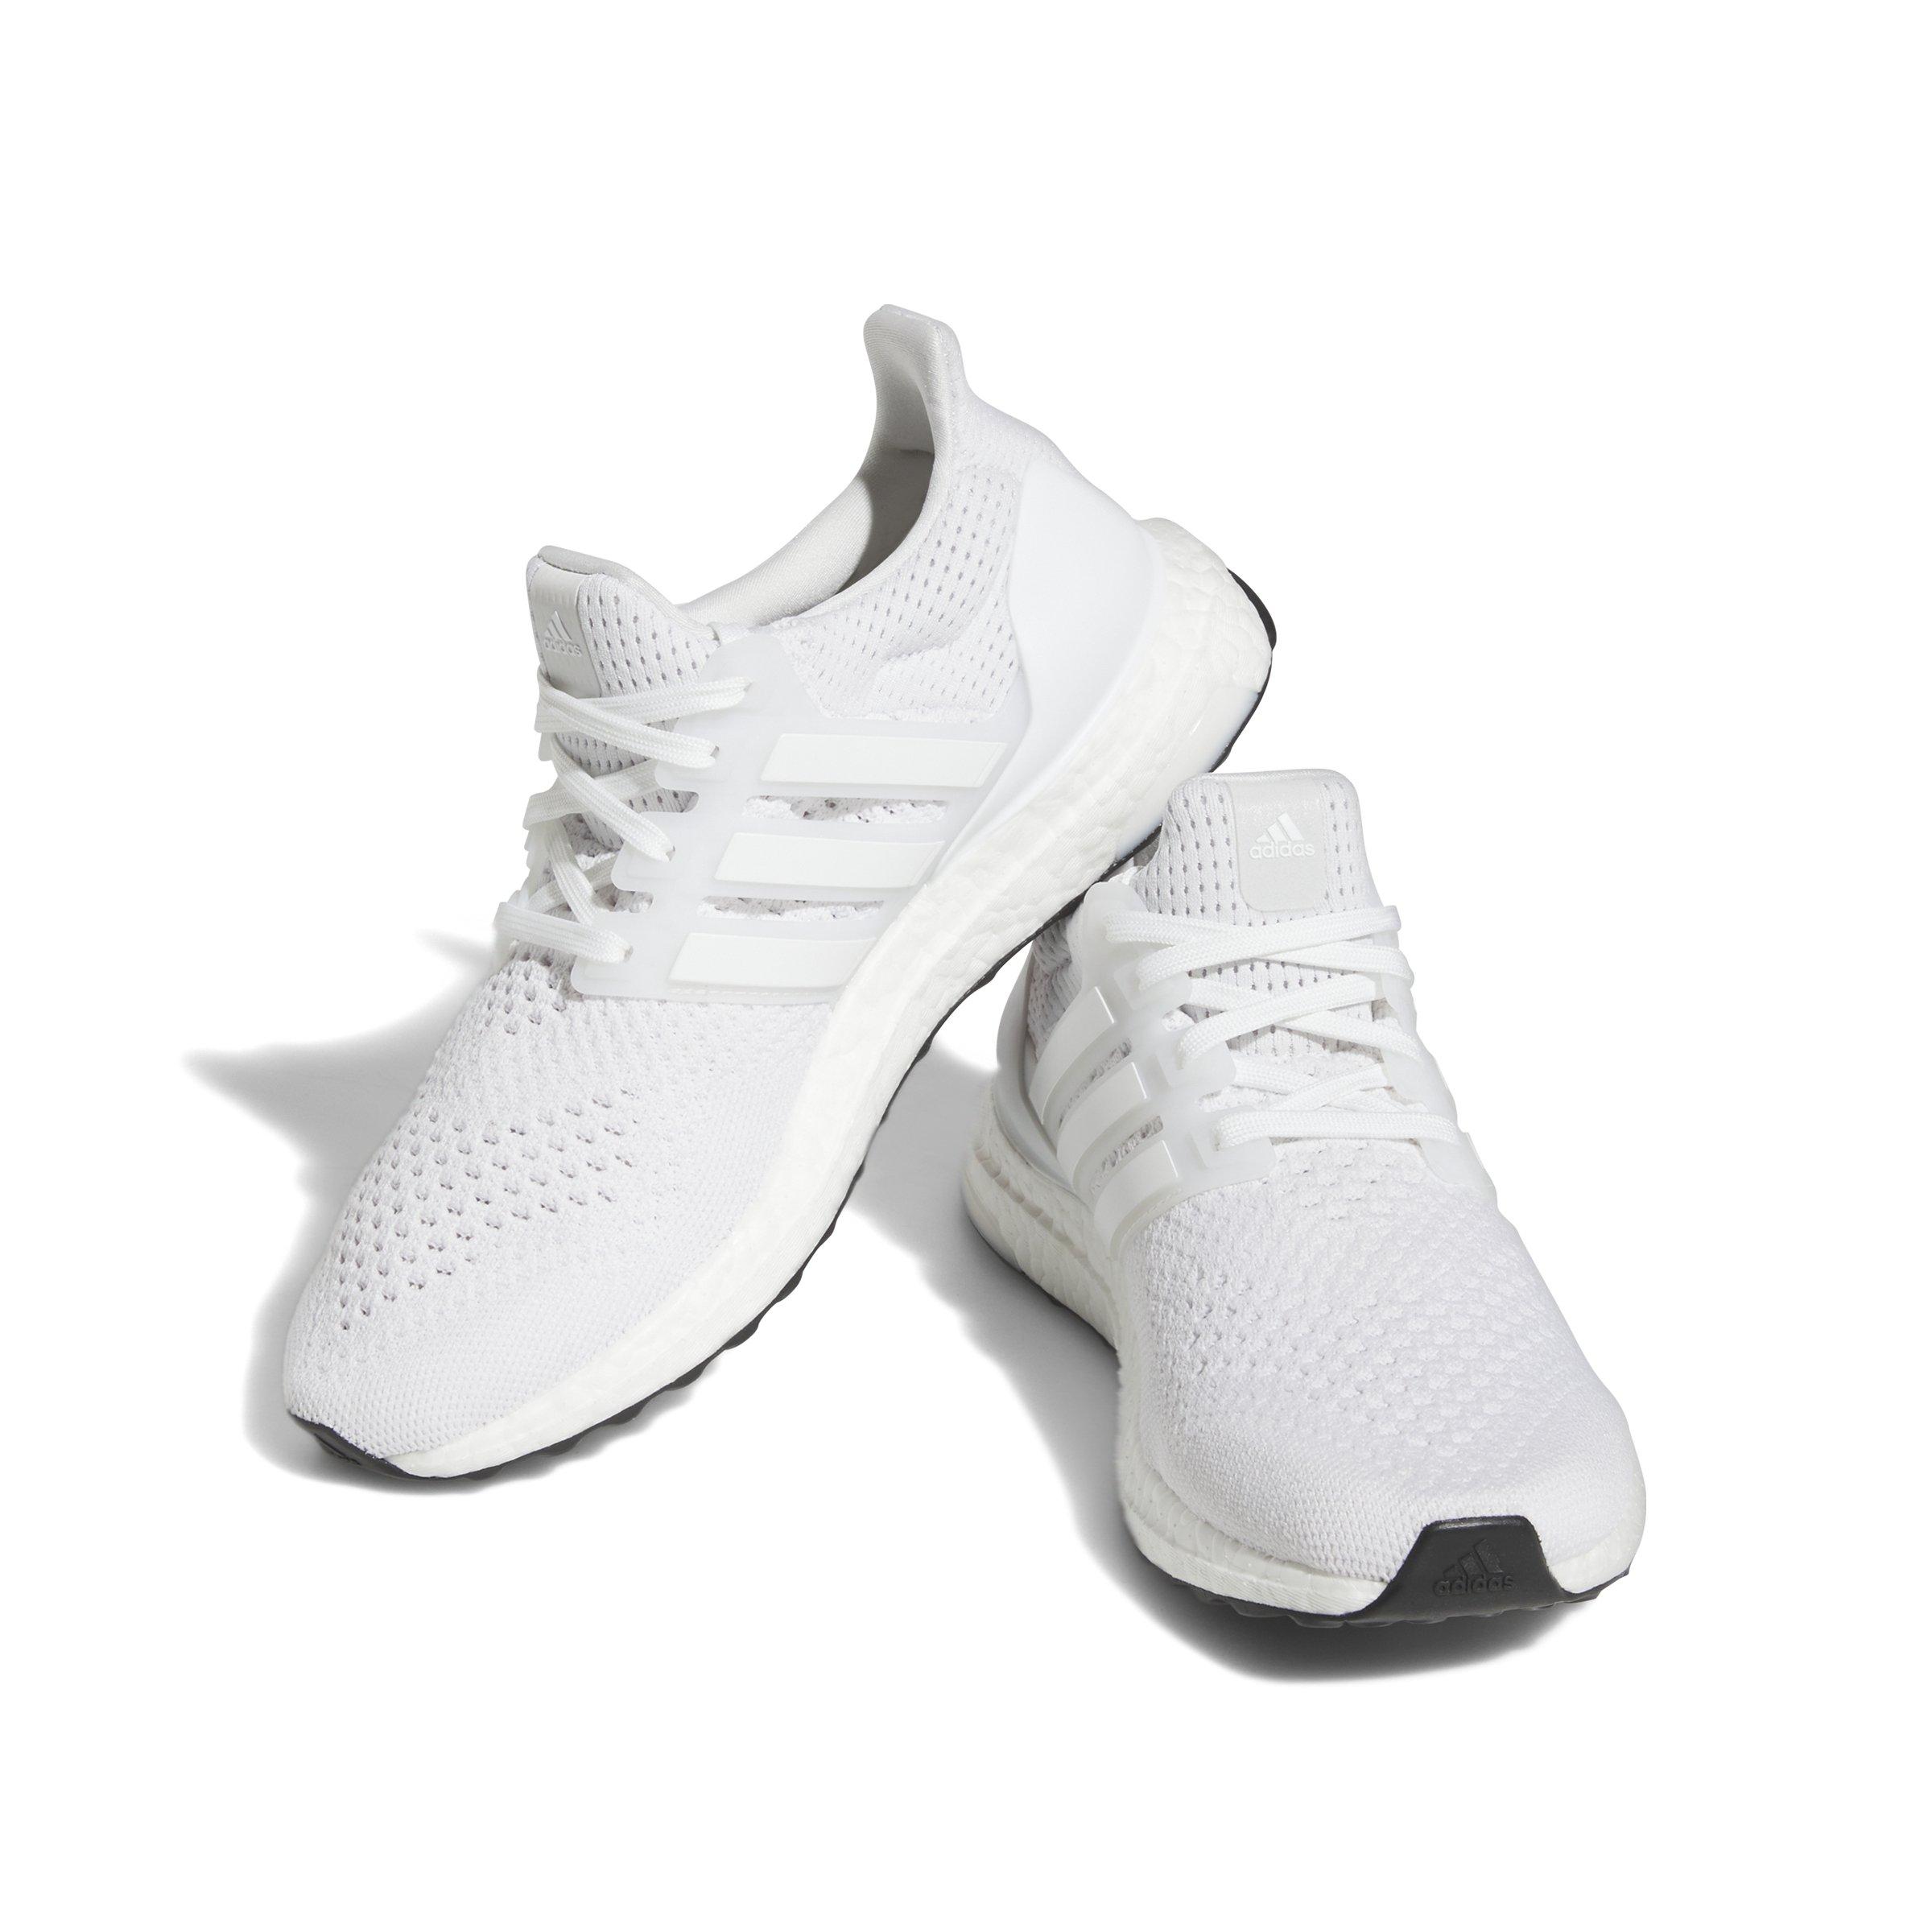 adidas Ultra Boost 1.0 Triple White (Women's) - S77513 - US